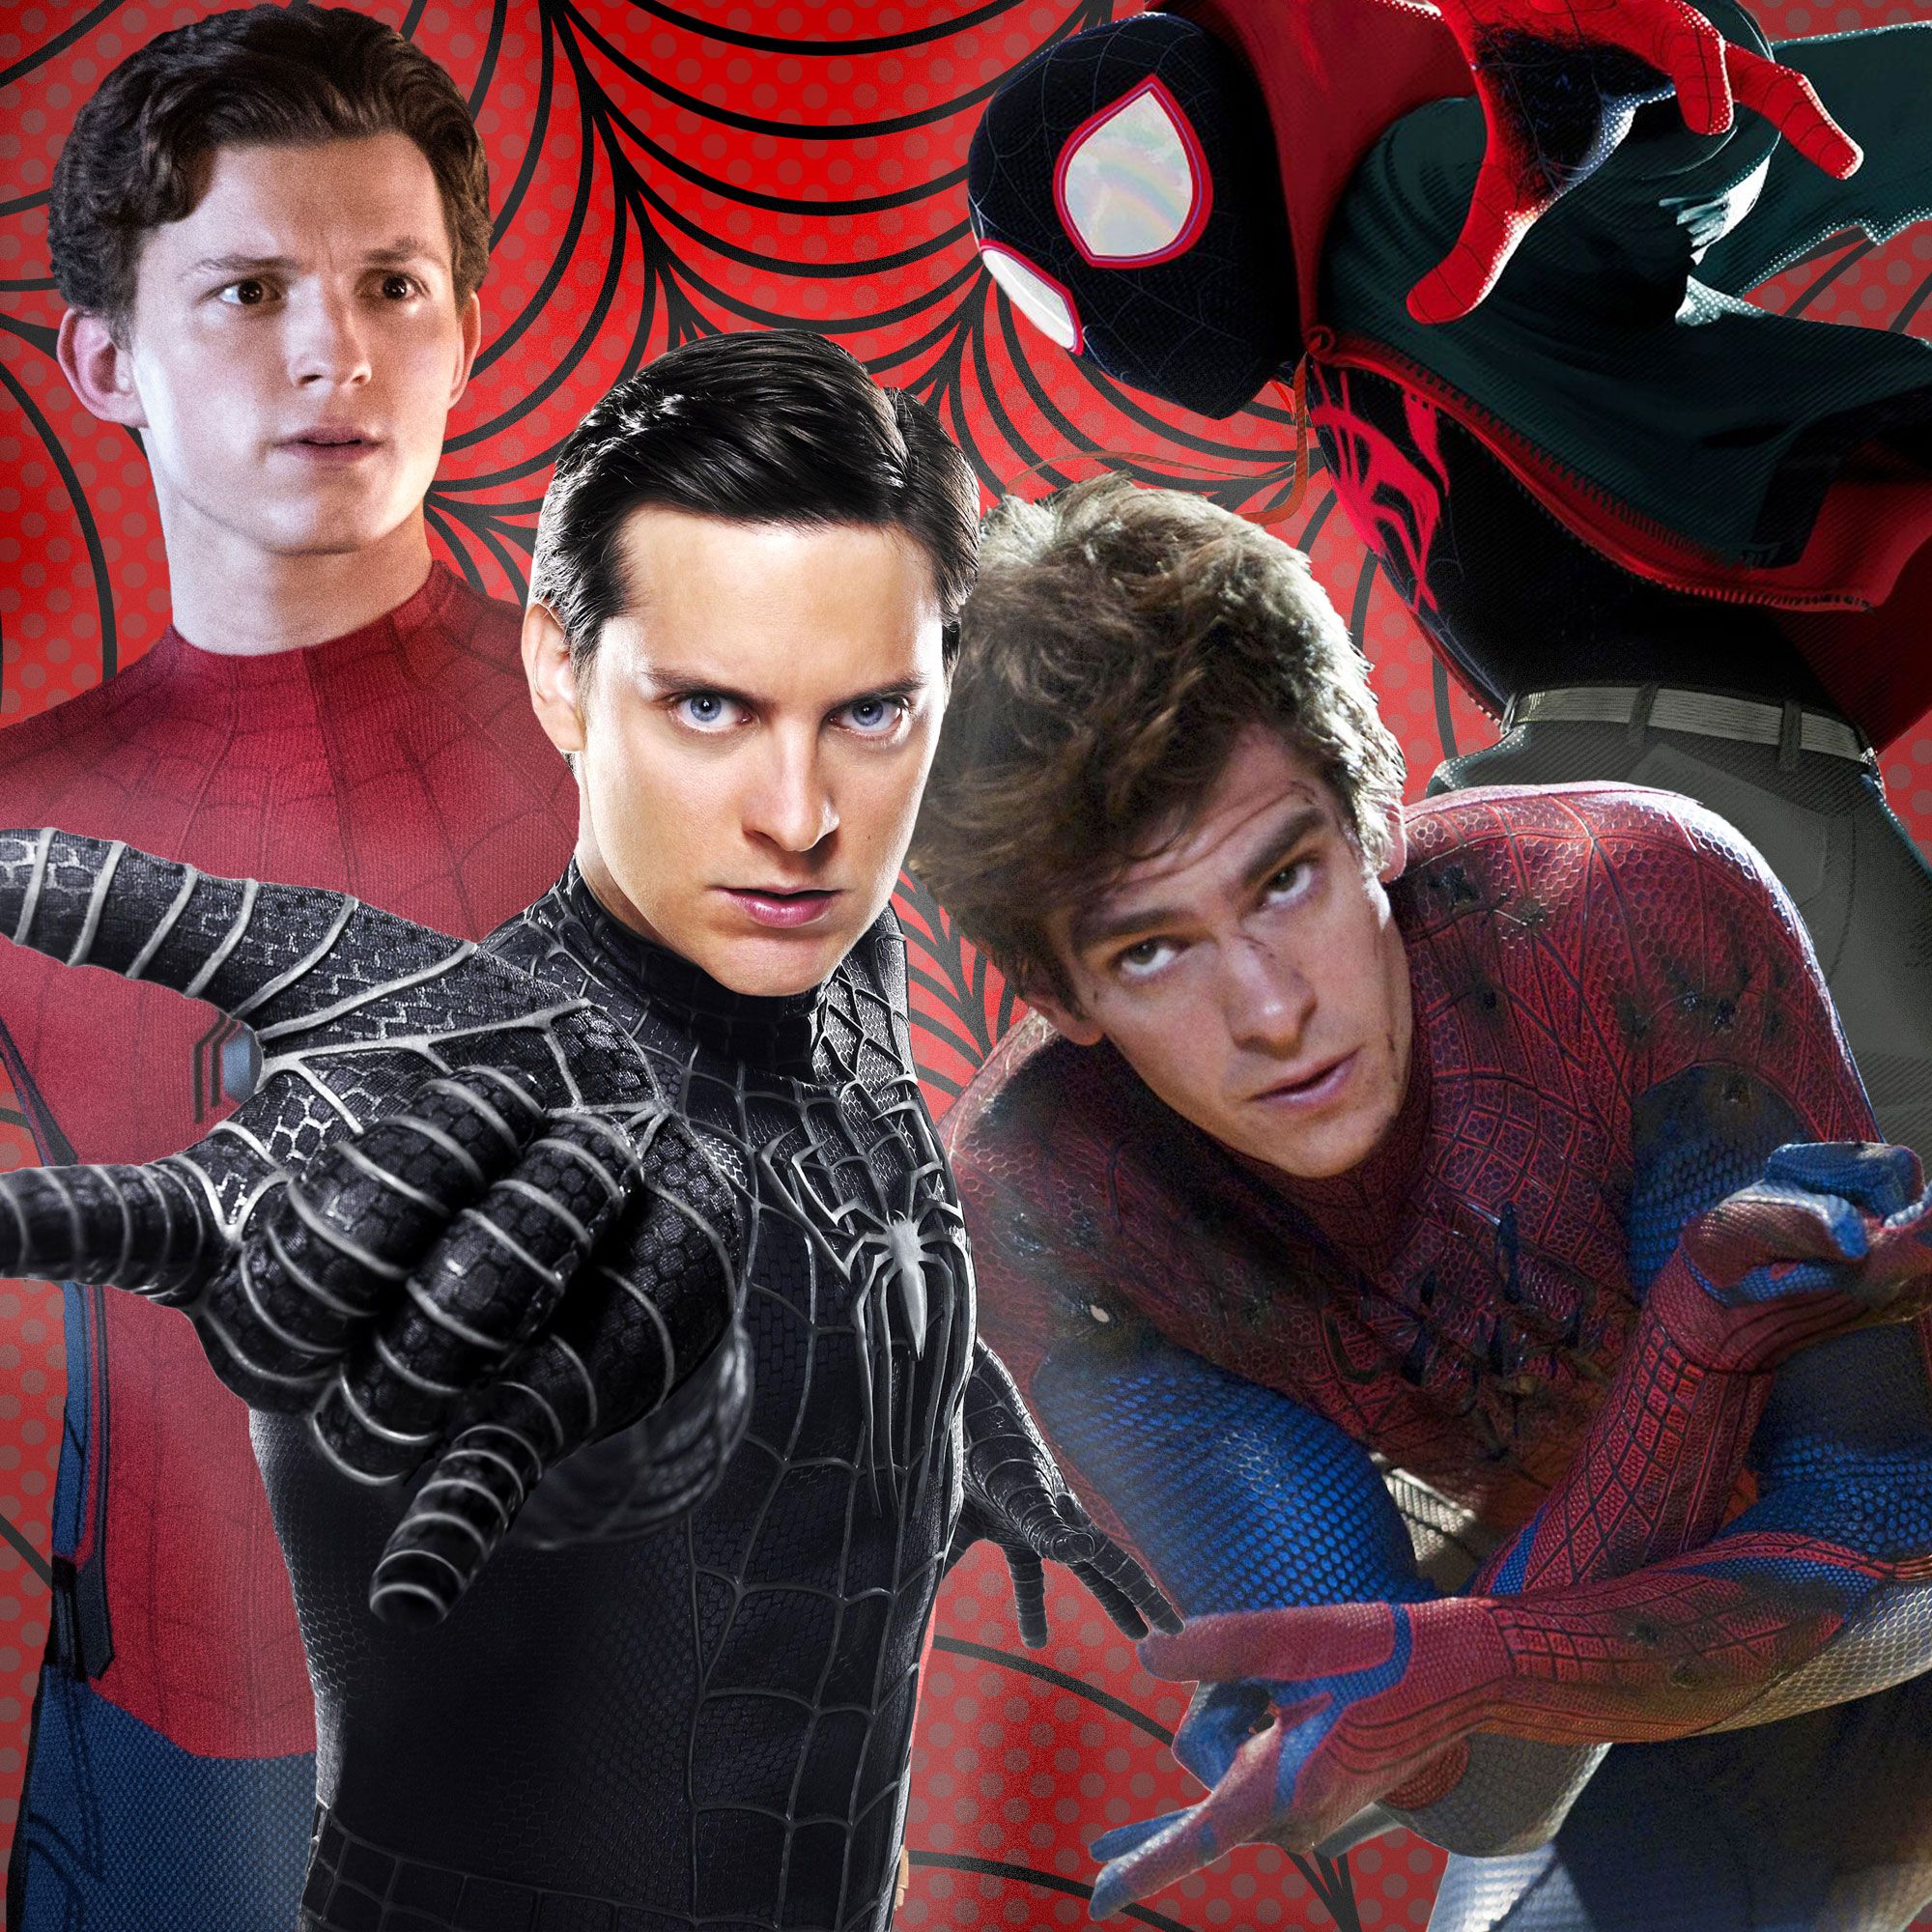 Which Spider-Man movie made the most money?